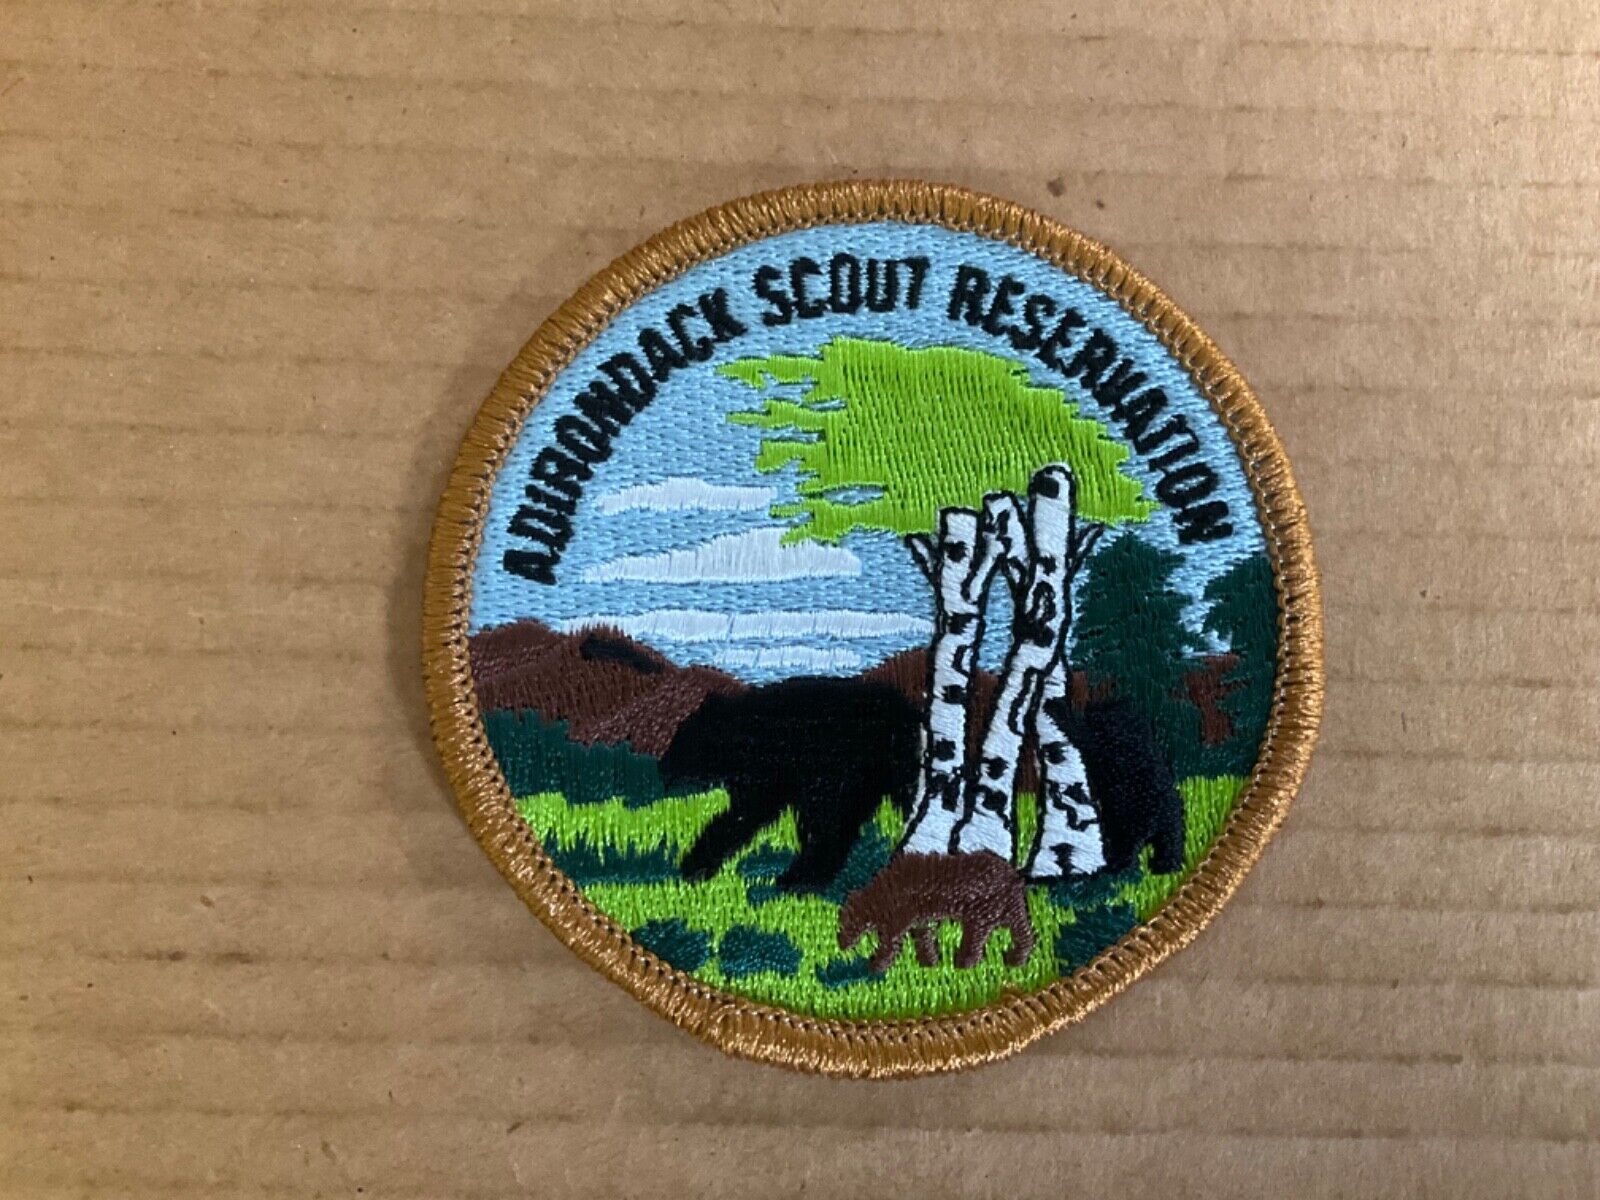 Sabattis Scout Camp Patch Adirondack Scout Reservation Hiawatha Council NY